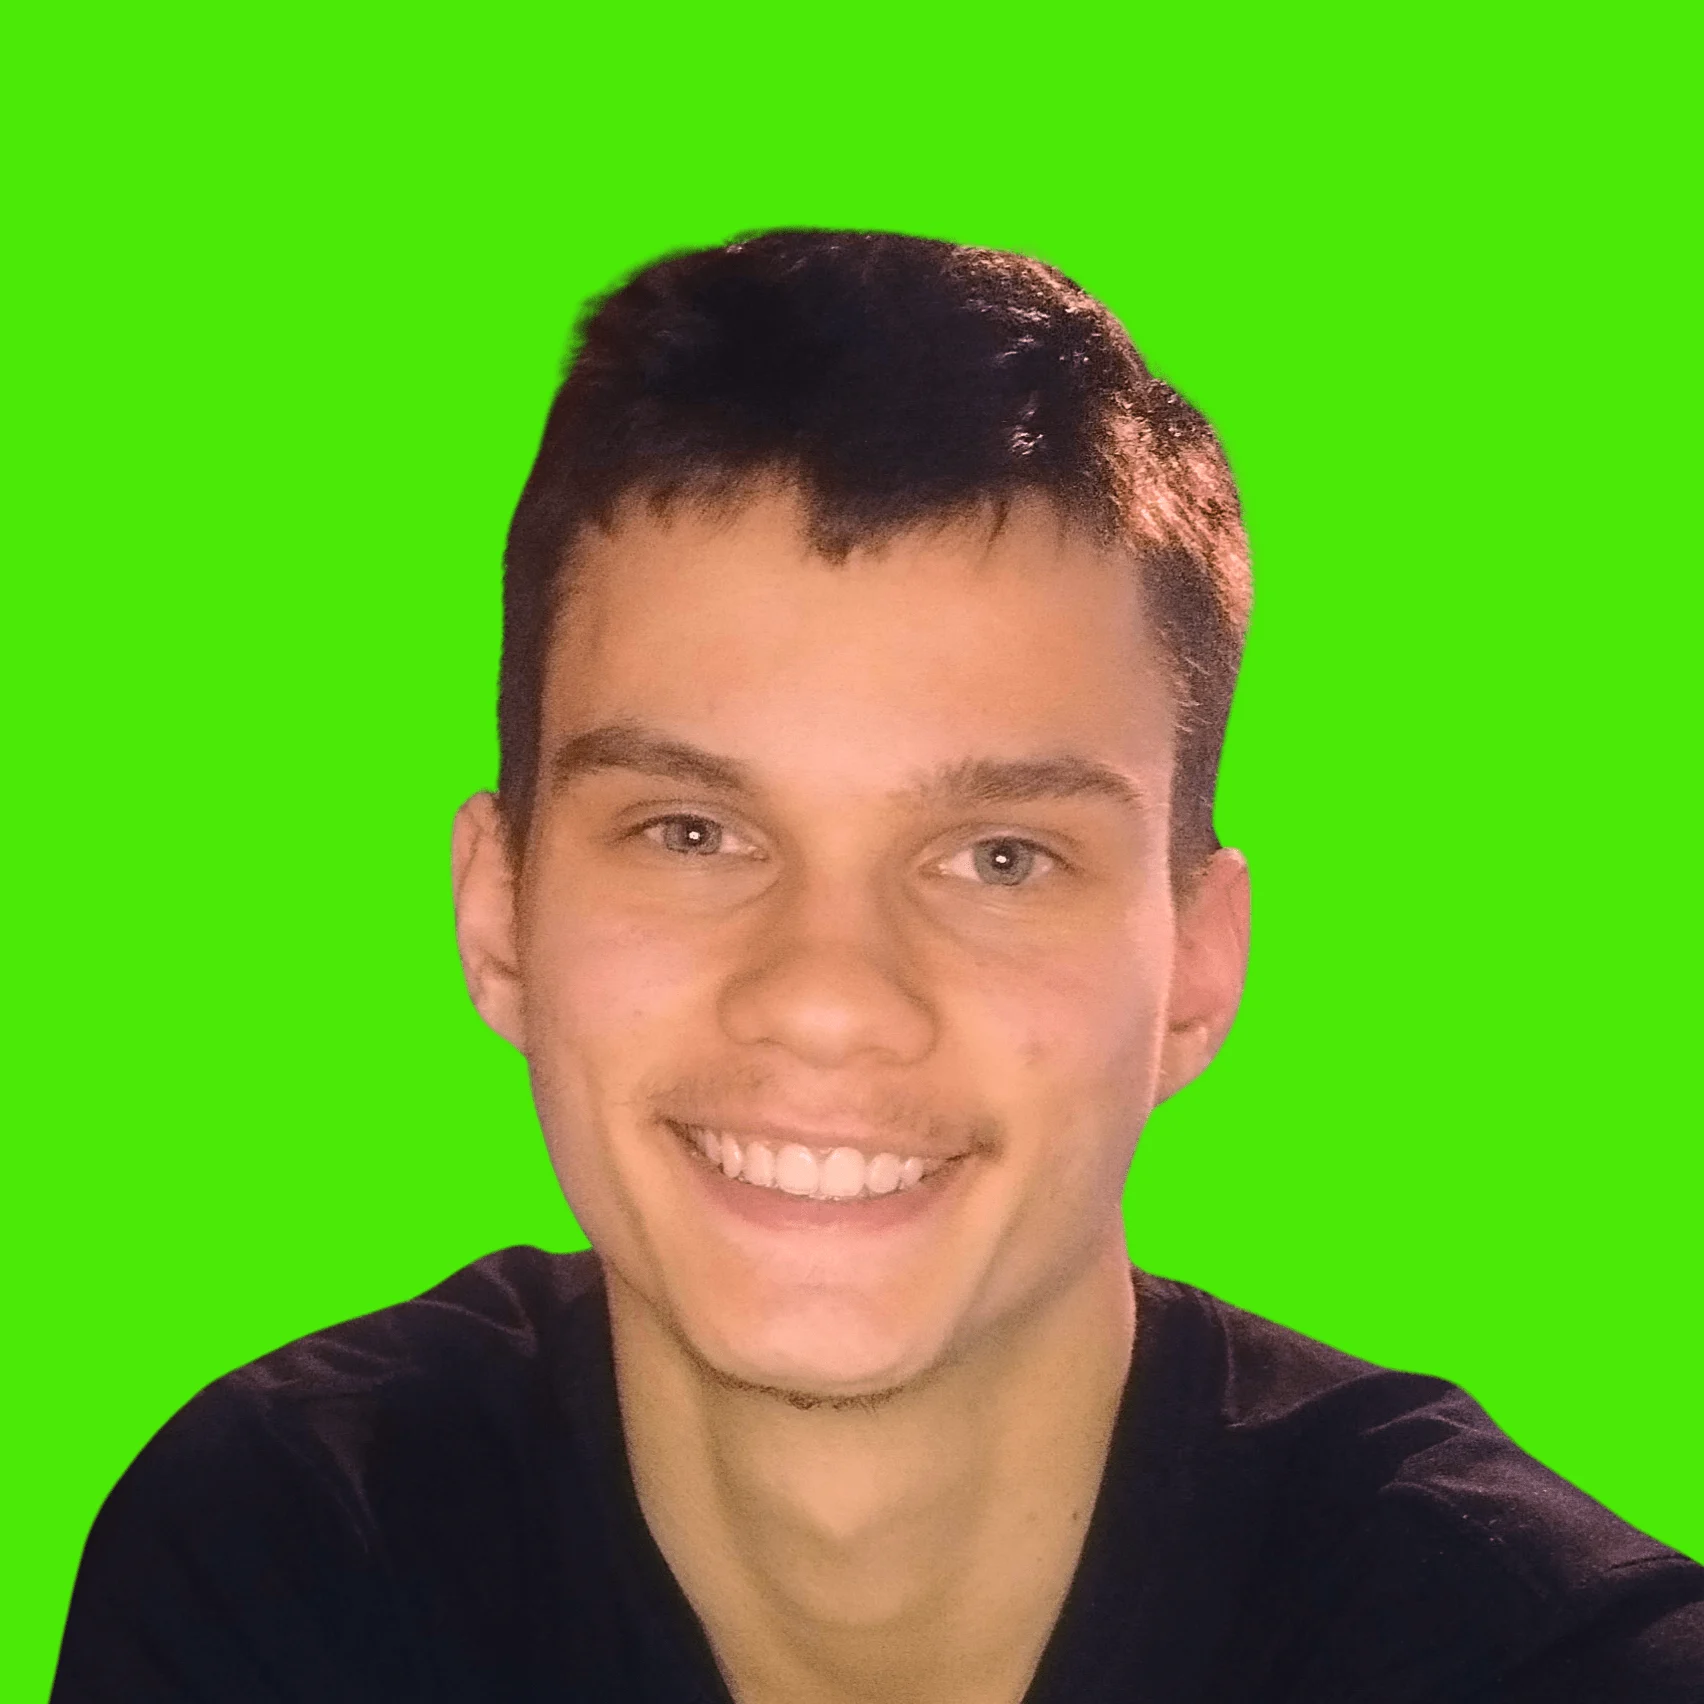 Mihajlo Coloveic's avatar